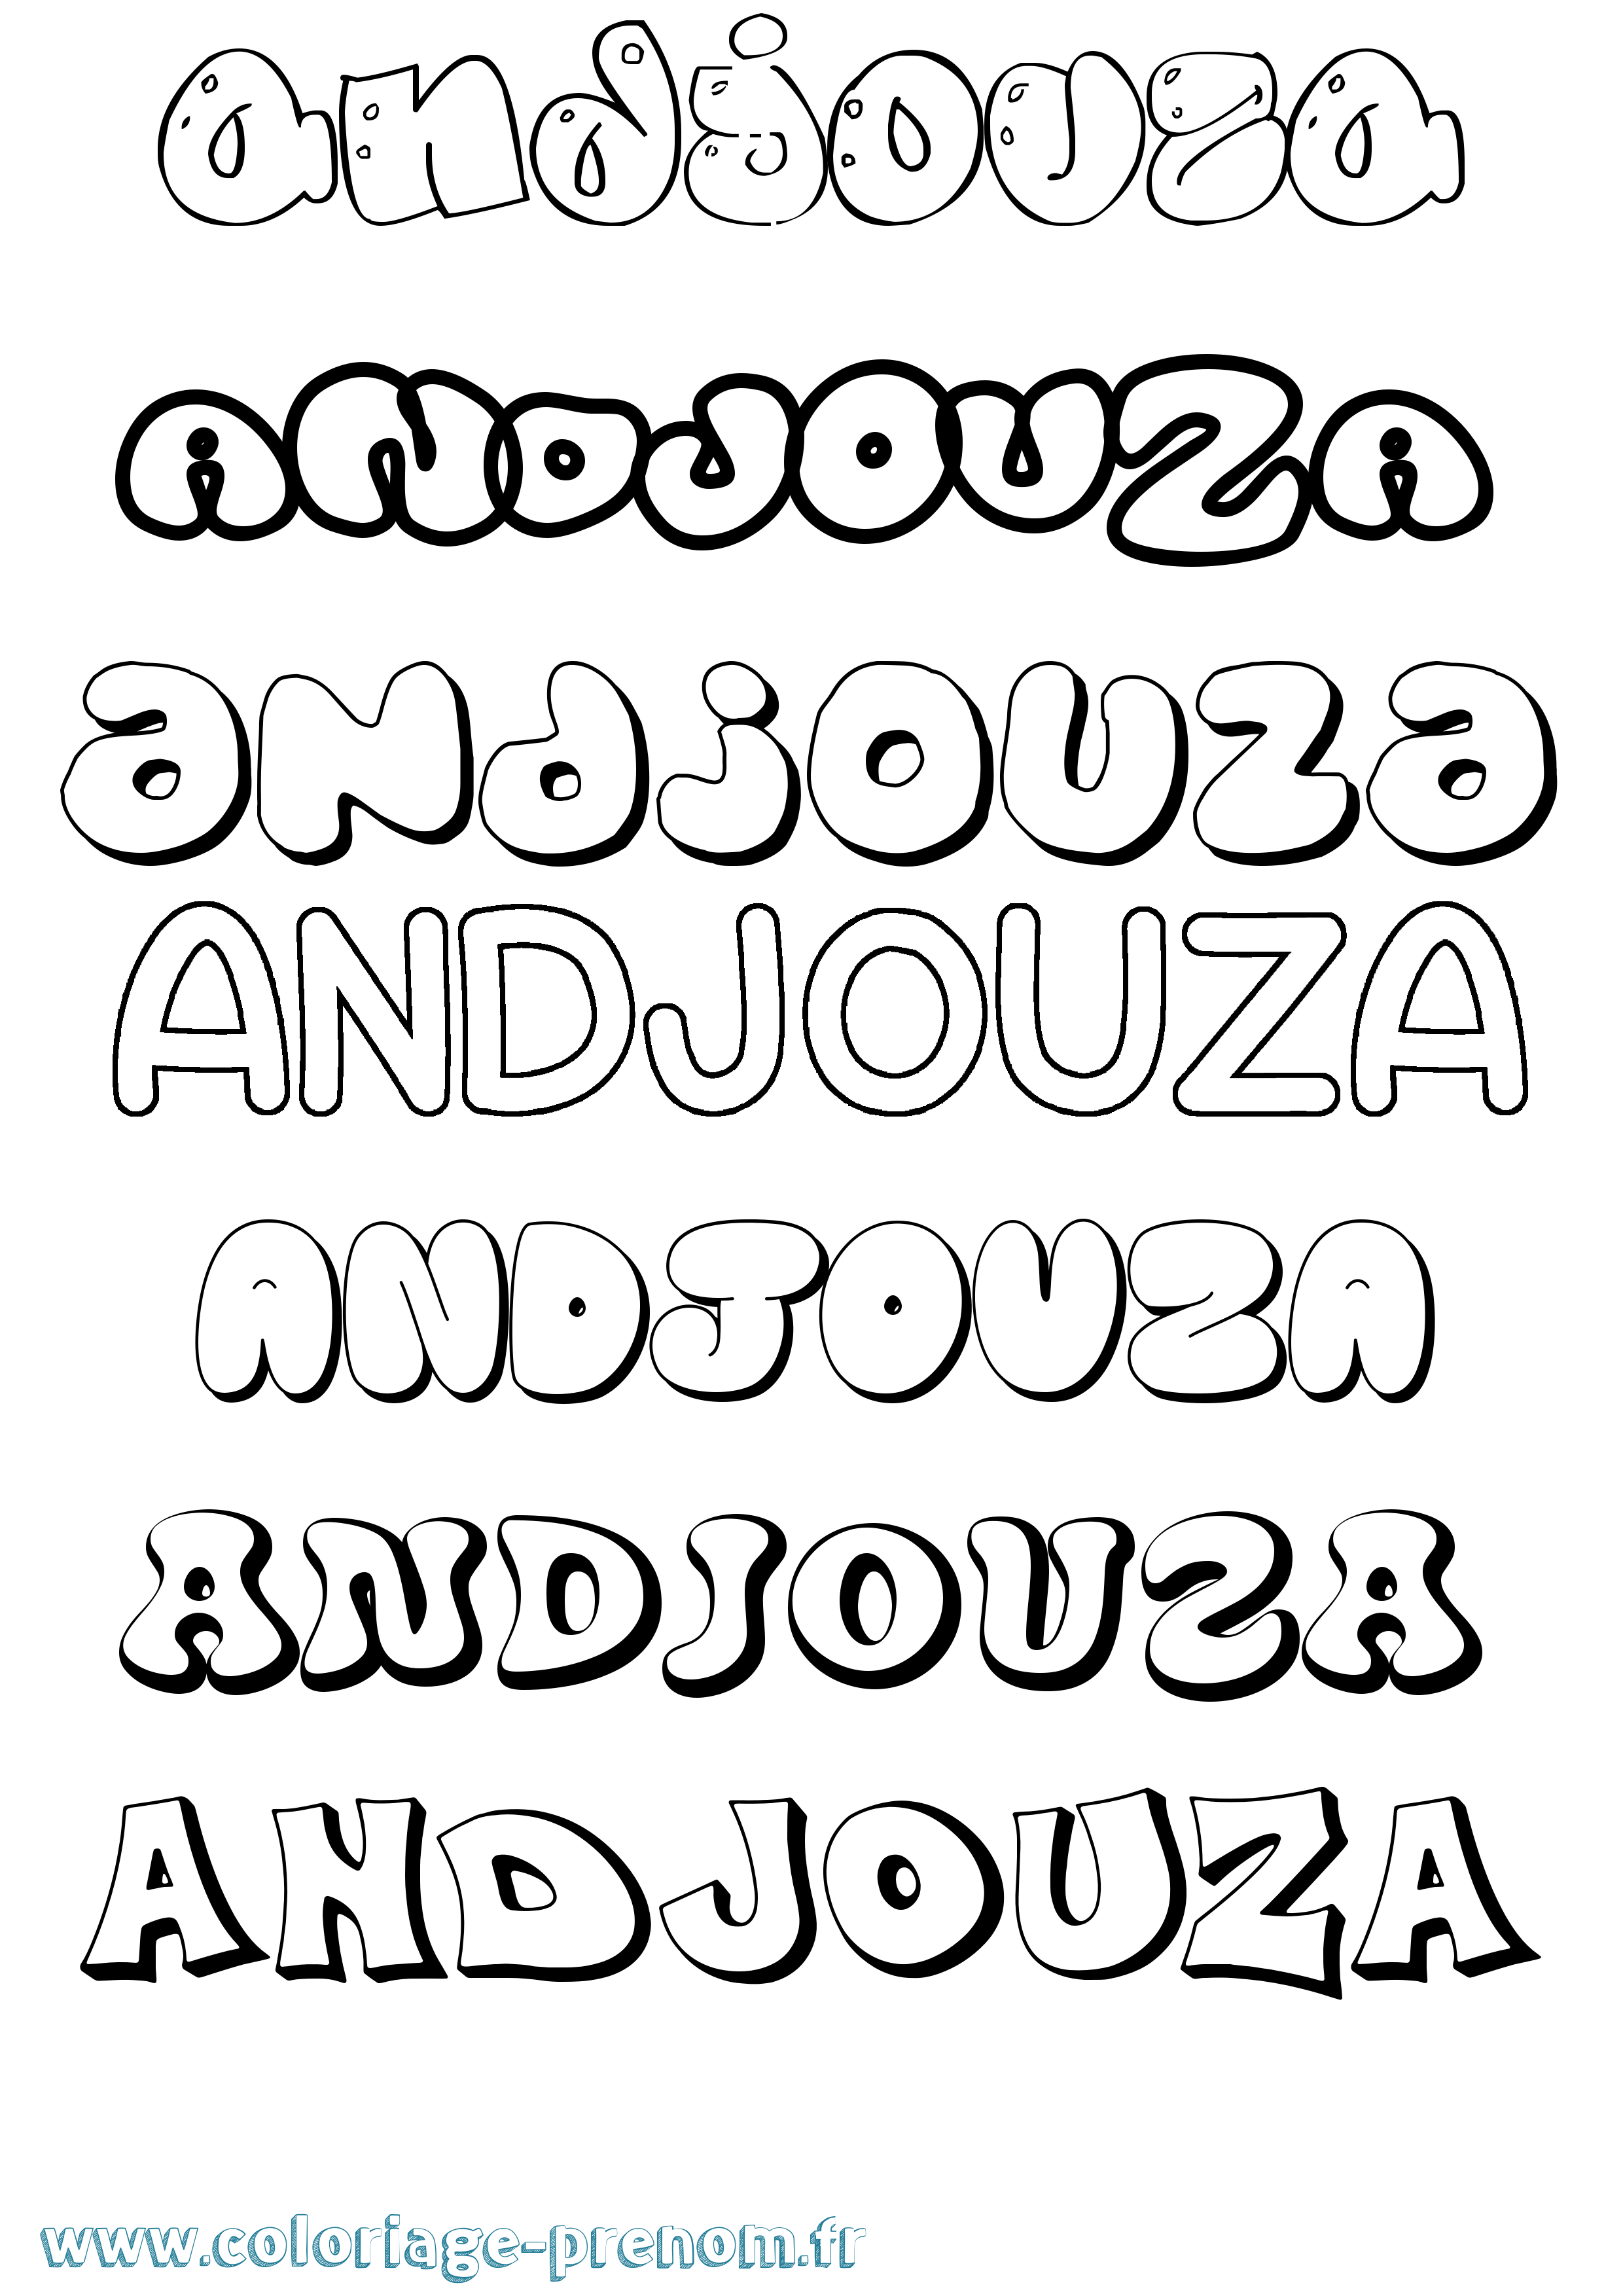 Coloriage prénom Andjouza Bubble